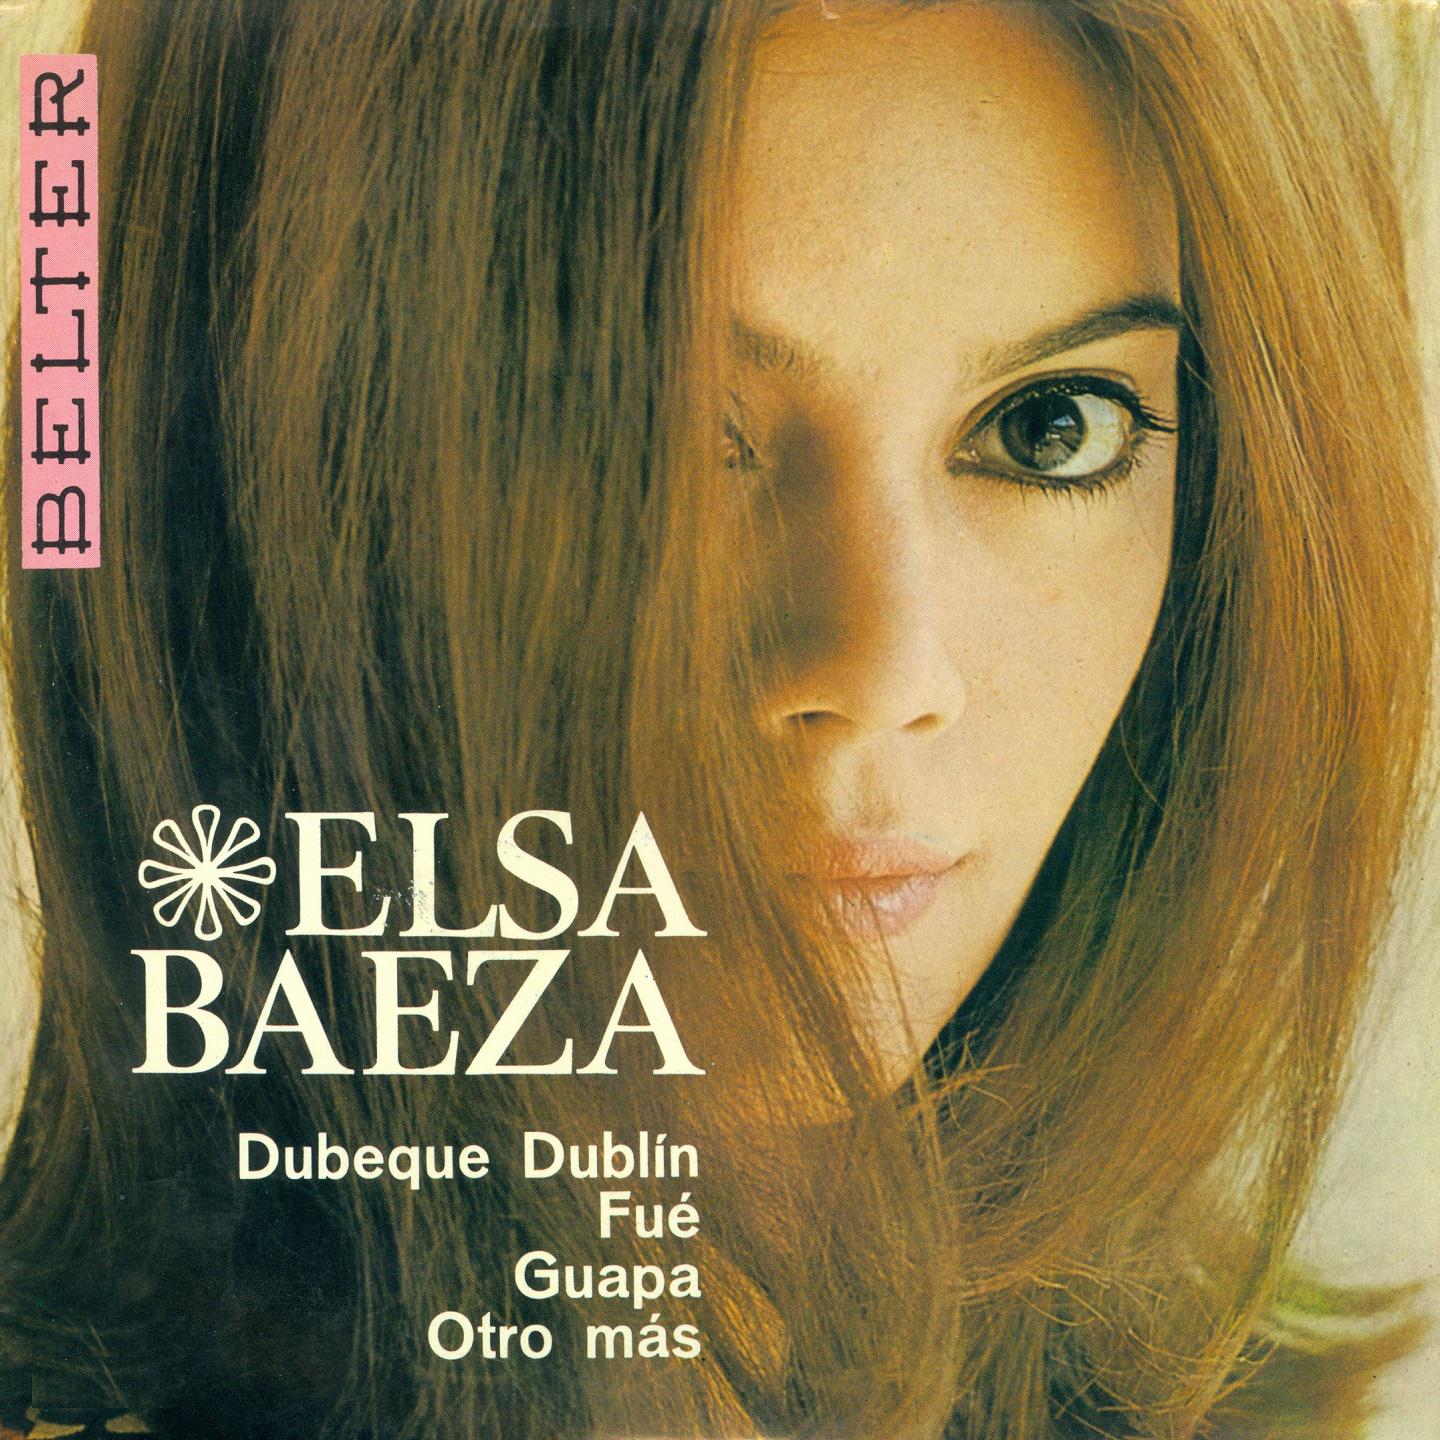 Elsa Baeza - Dubeque Dublín (Bate Papo Moderninho)